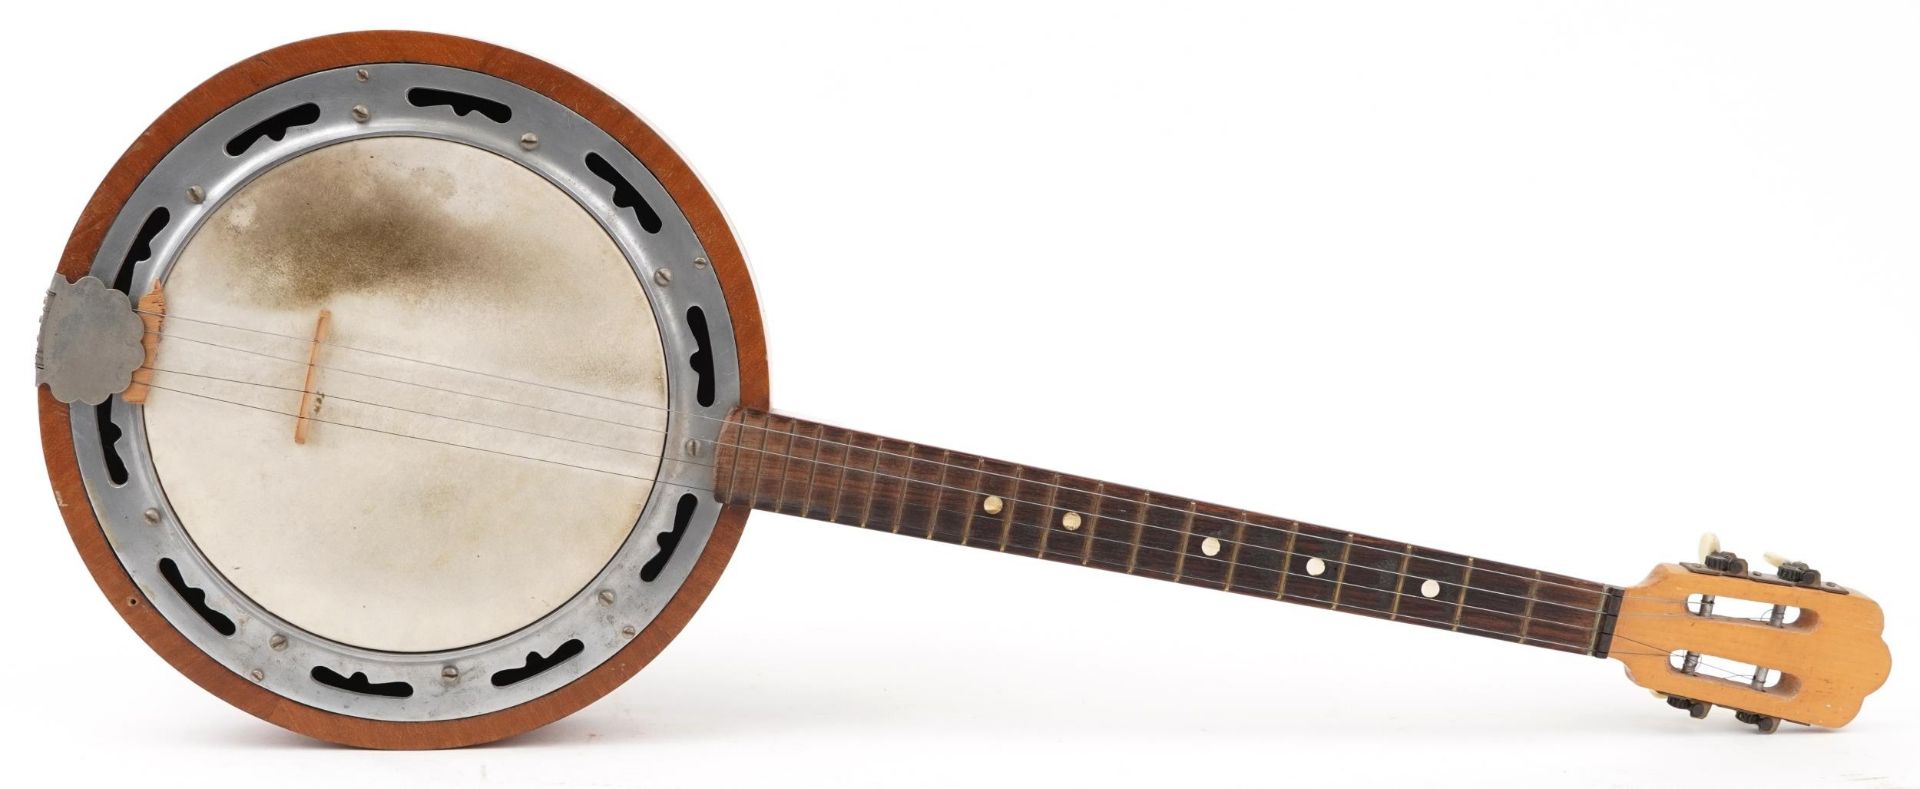 Vintage four string banjo, 83cm in length : For further information on this lot please visit